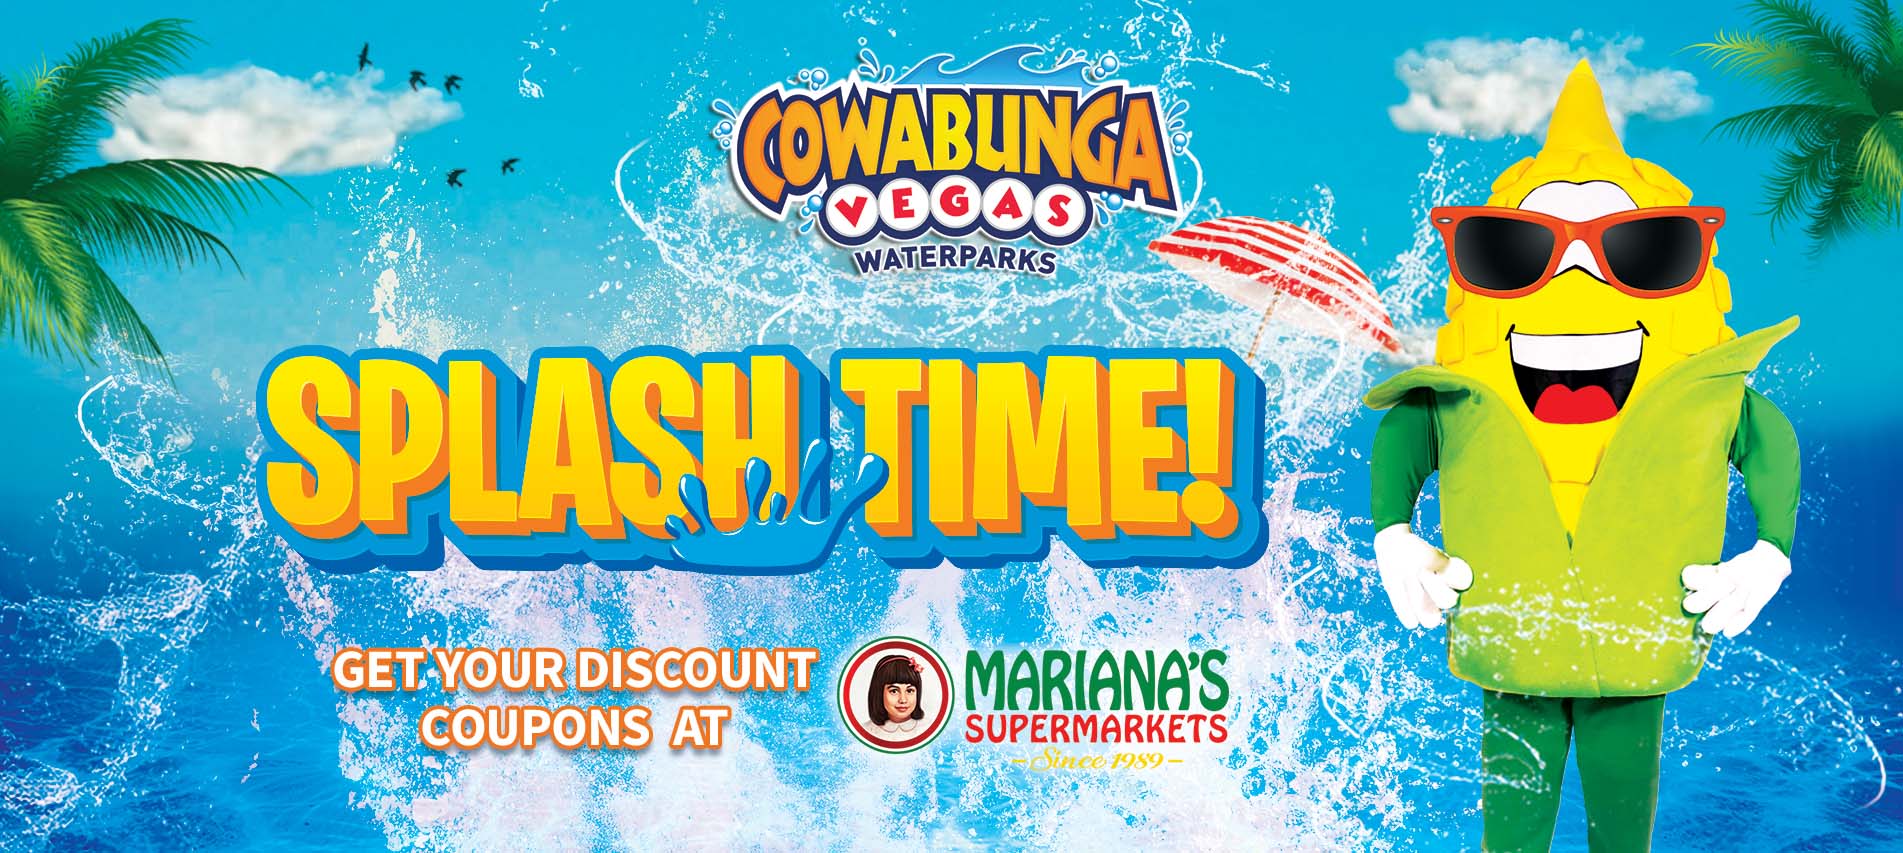 Cowadunga Vegas Waterparks get your disounnt coupons at mariana's markets